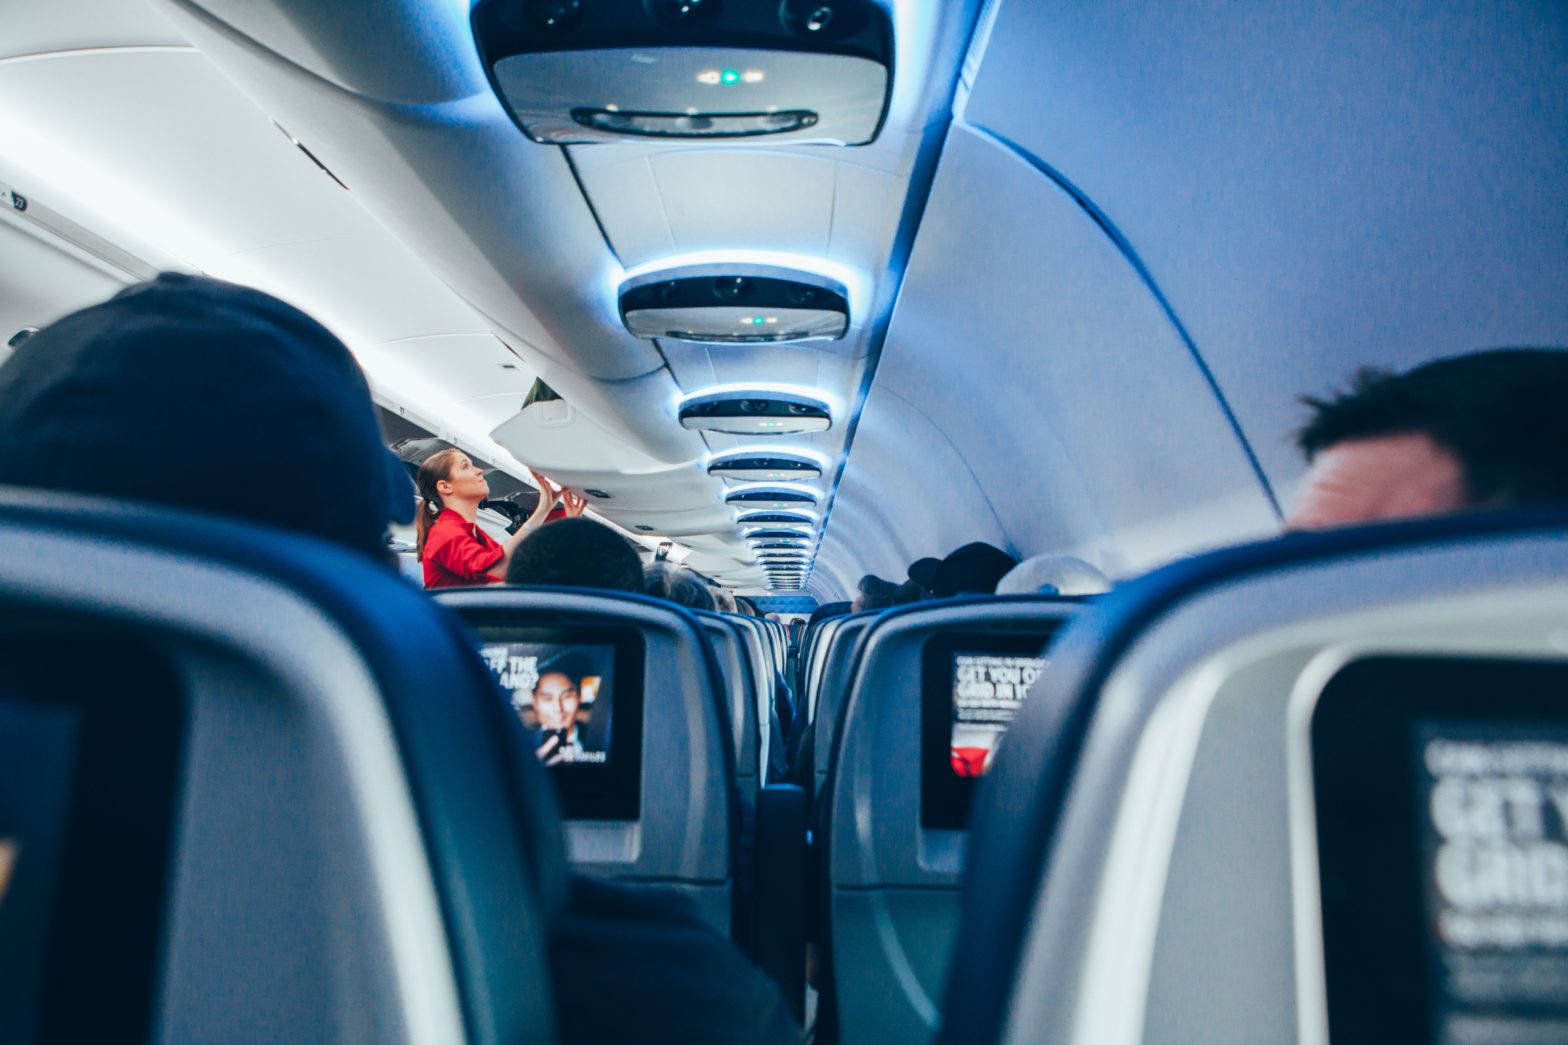 "Manspreading" On Flight Prompts Passenger To Share Photo On Reddit